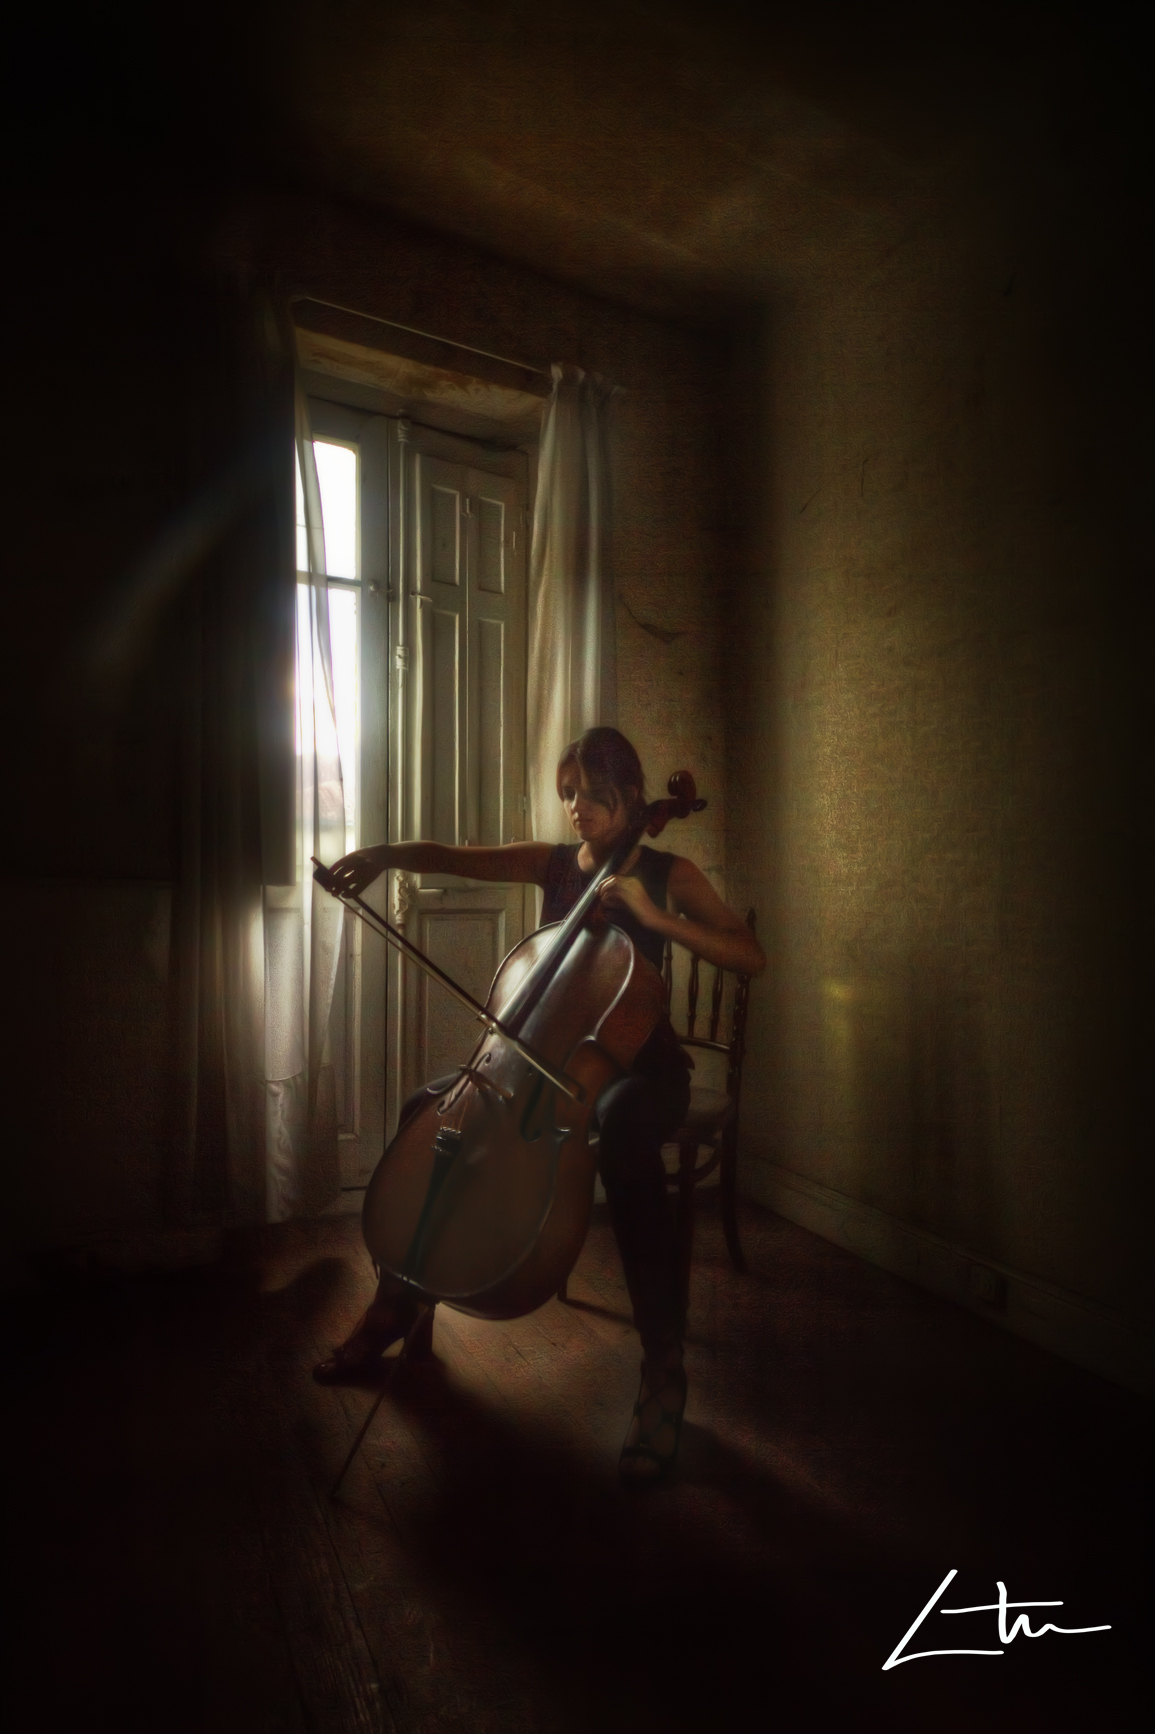 Cello and light